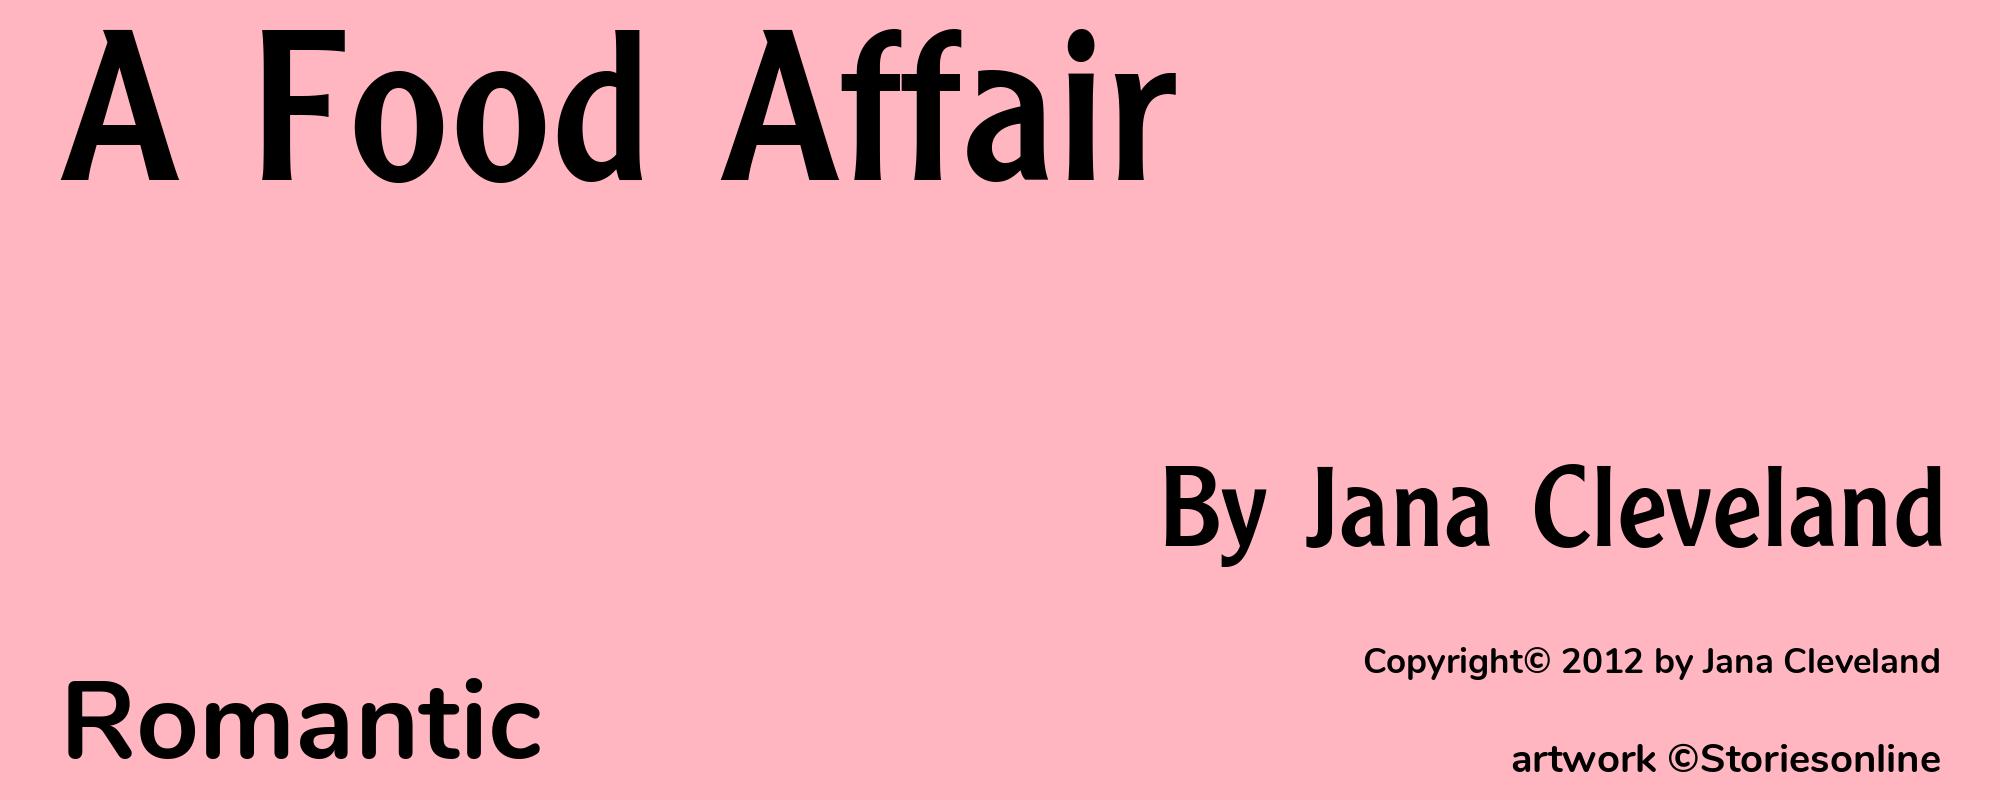 A Food Affair - Cover